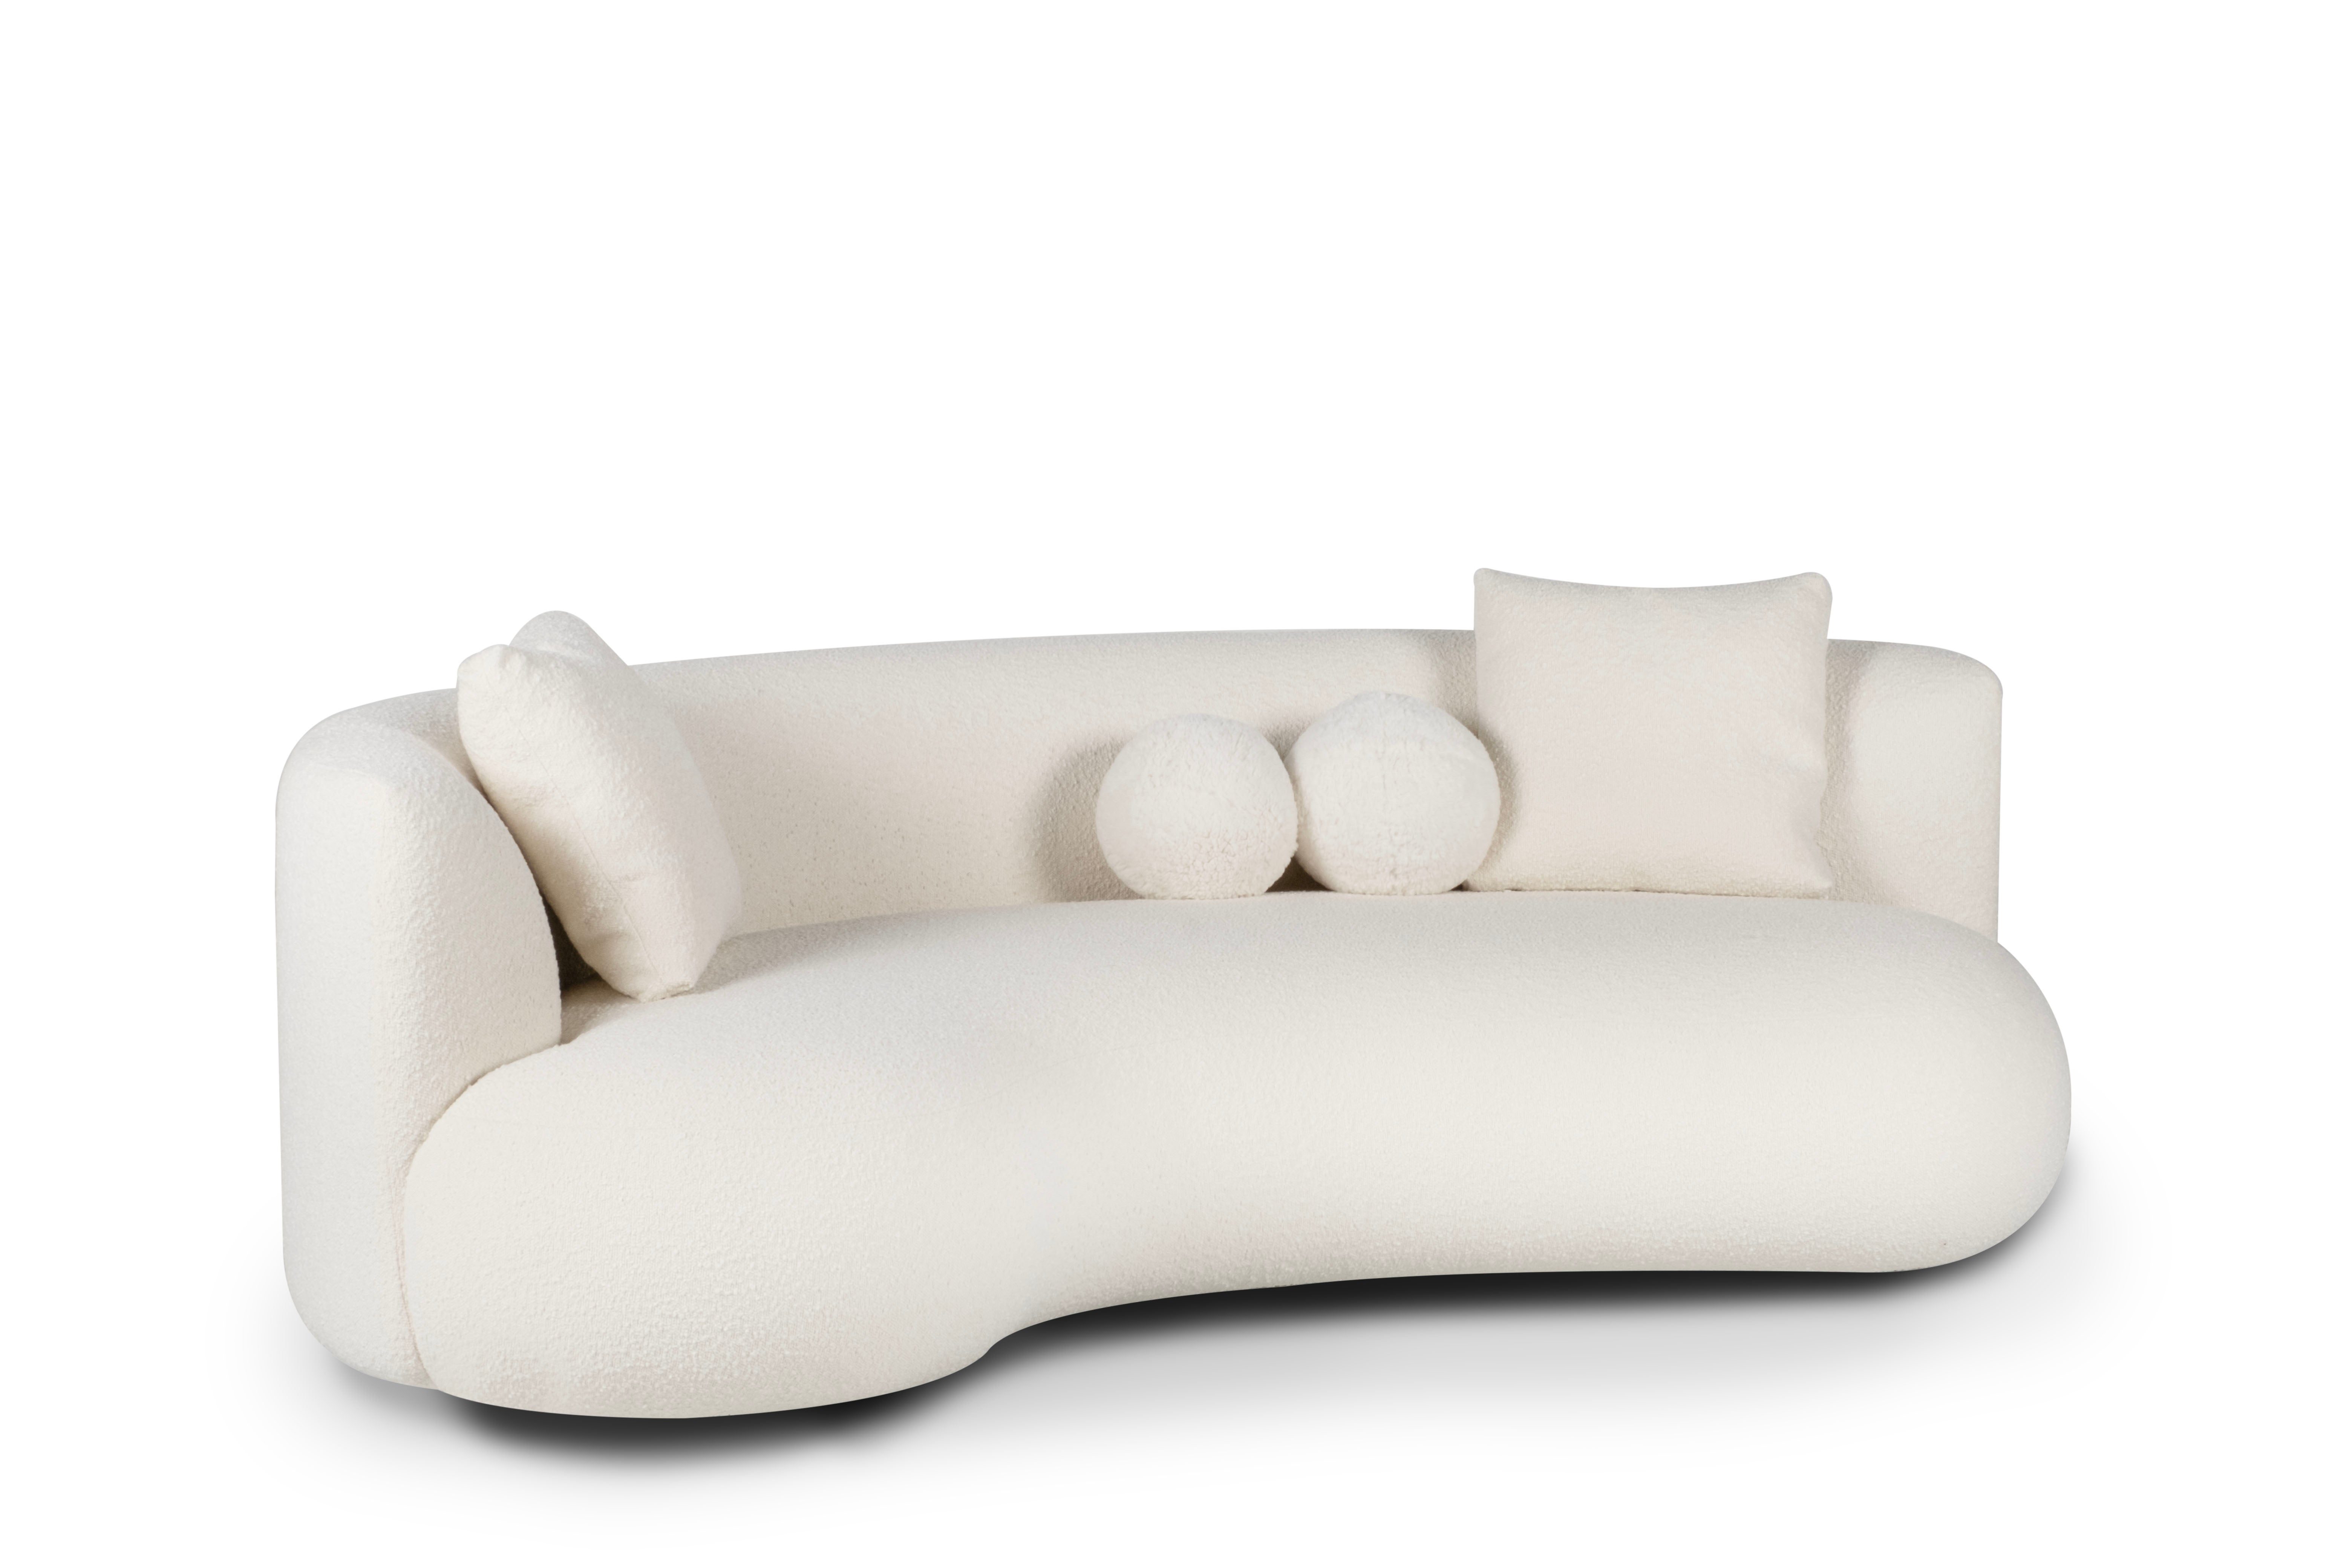 Organic Modern Twins Curved Sofa, White Bouclé, Handmade Portugal by Greenapple